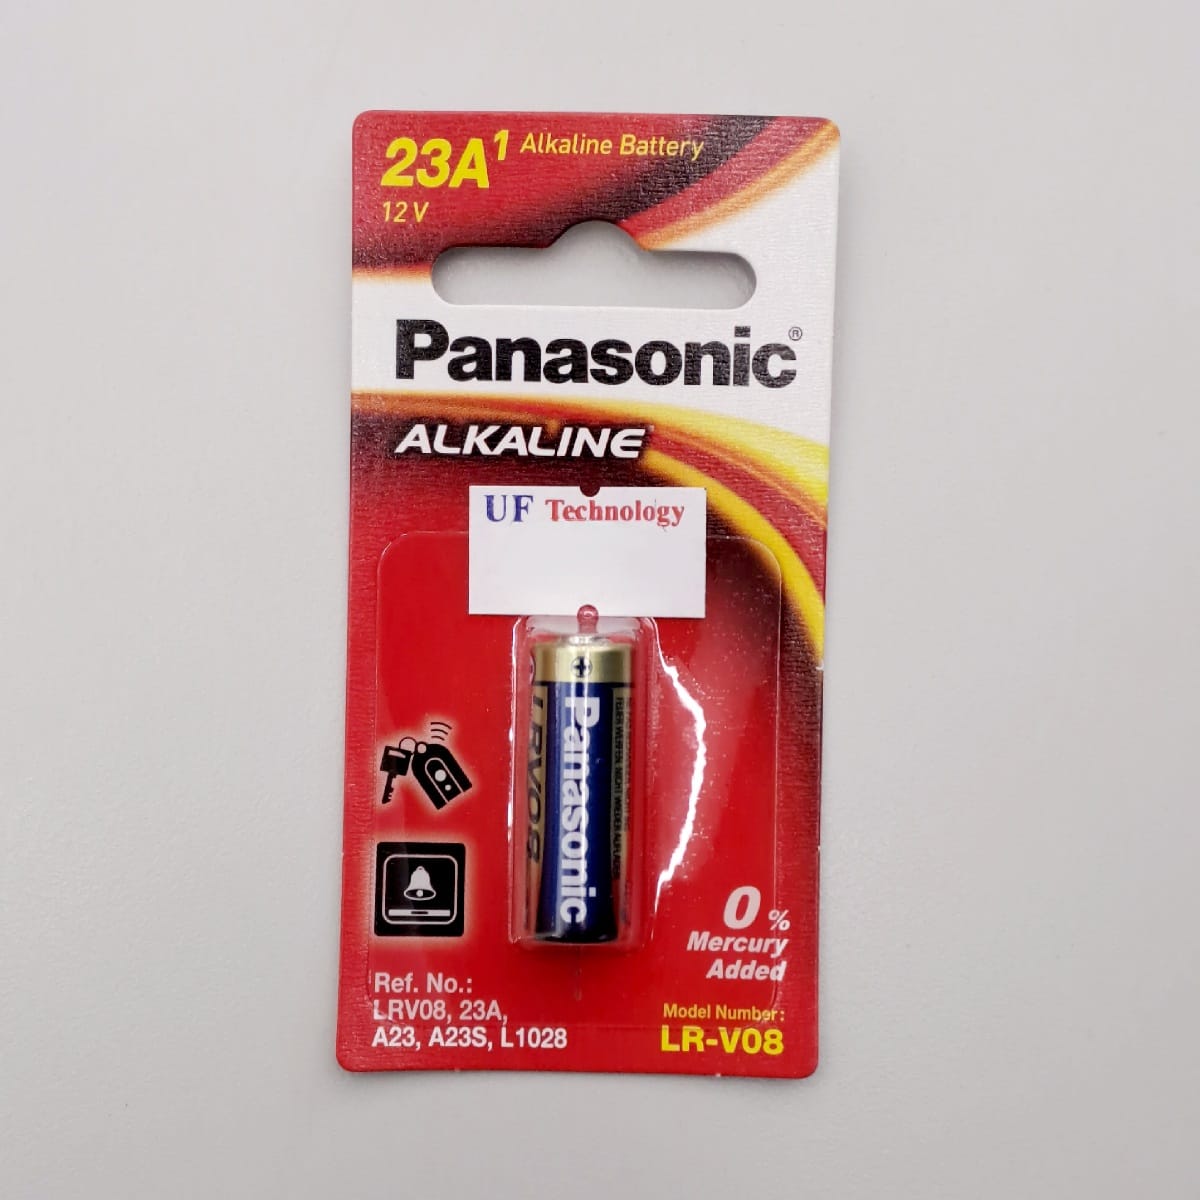 Panasonic 23A 12V Alkaline Battery